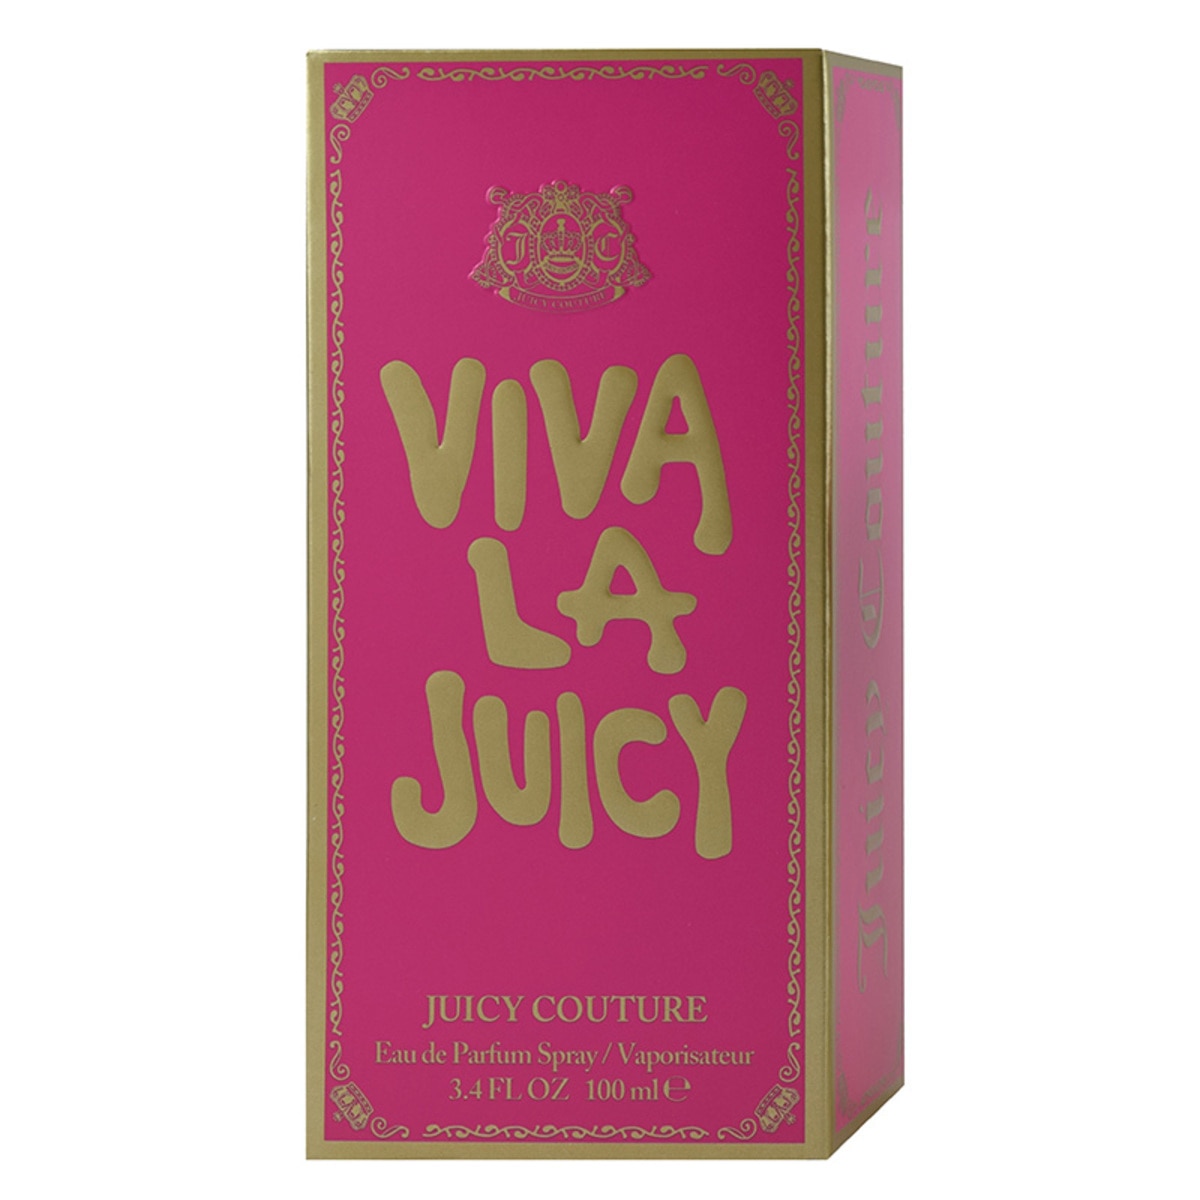 Juicy Couture Viva la Juicy 100ml